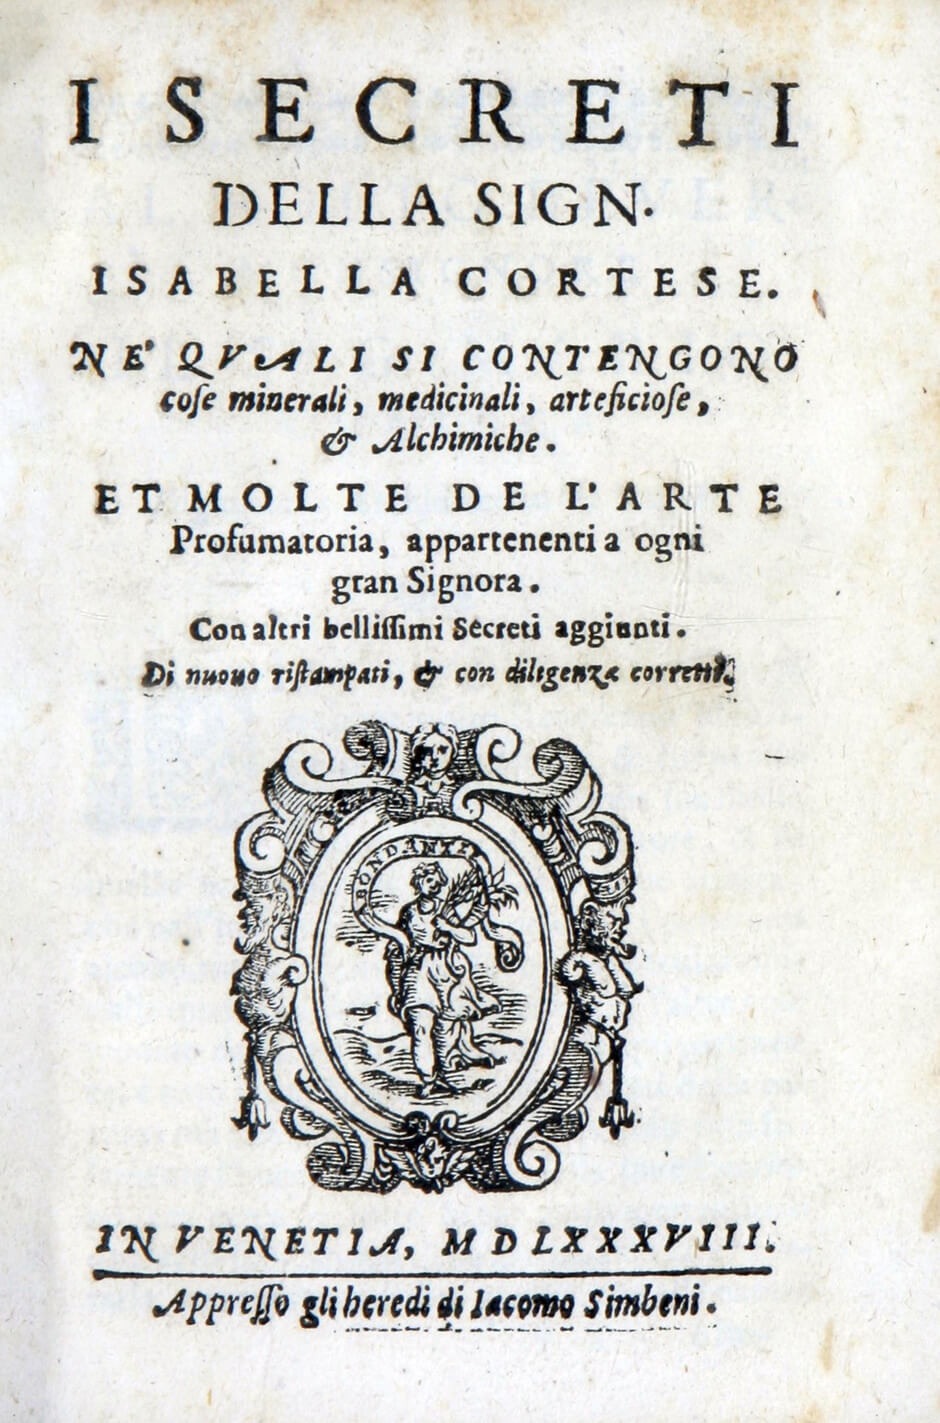 Isabella Cortese